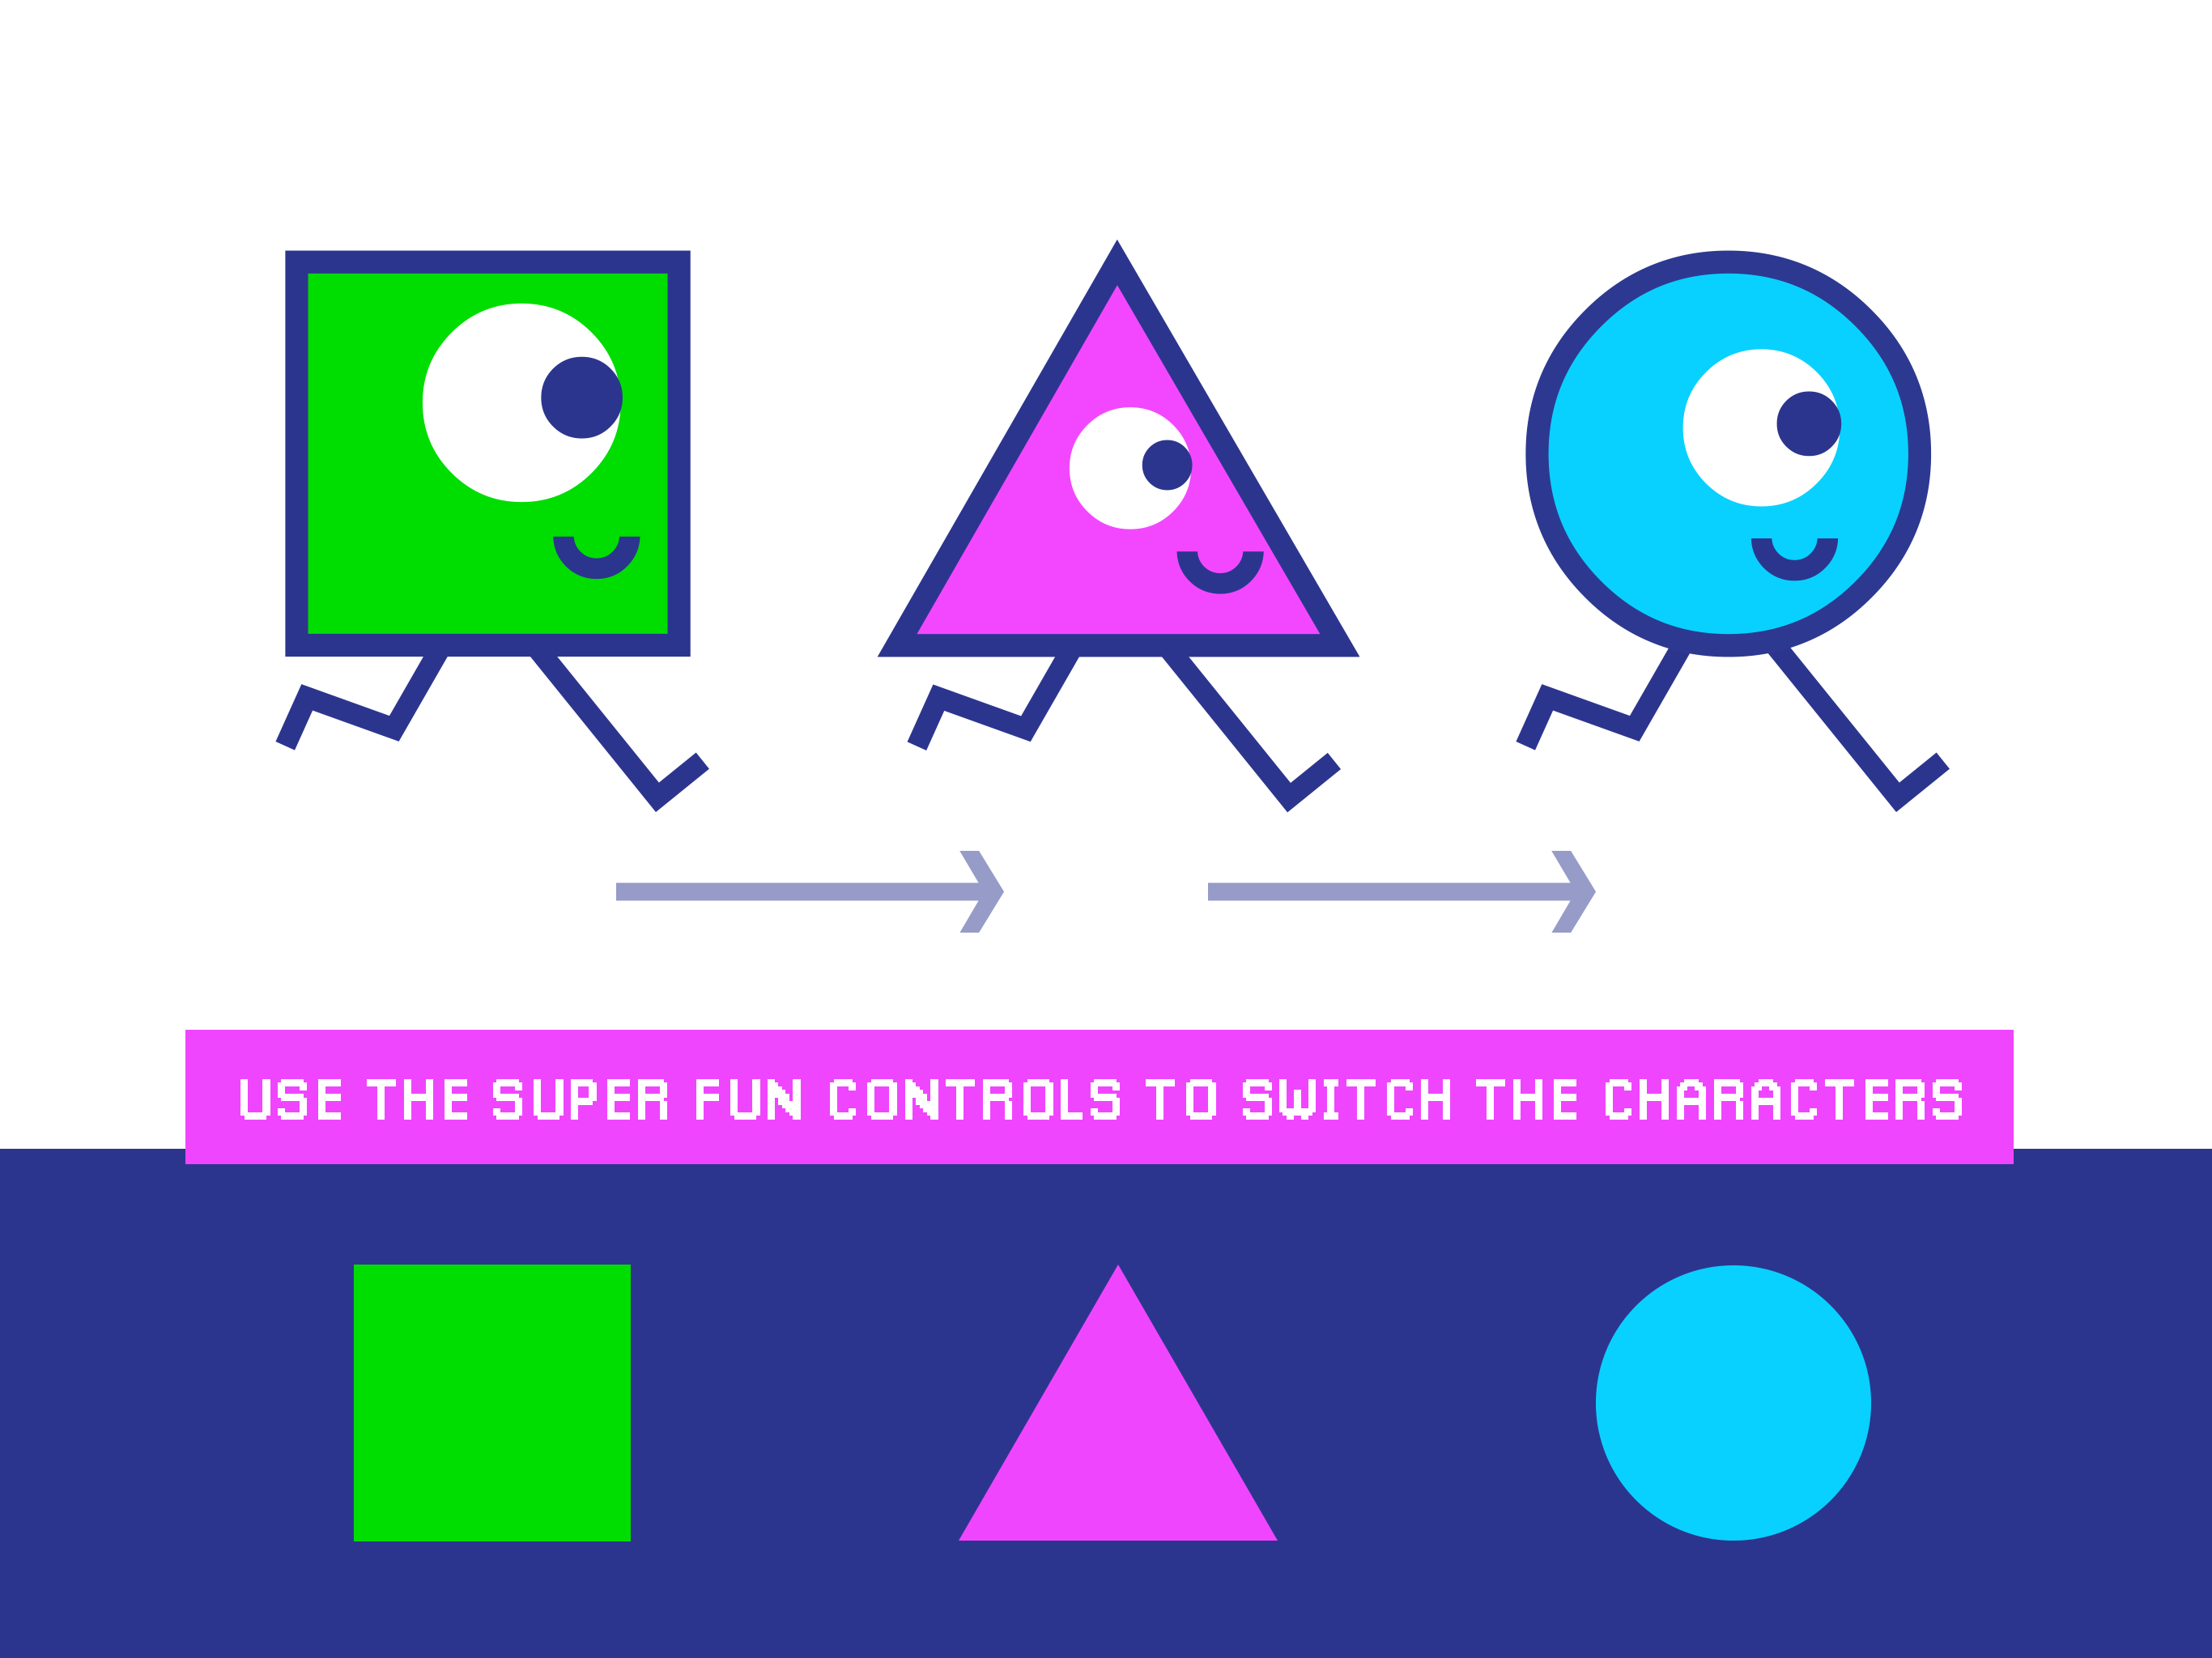 STC - Square Triangle Circle screenshot game